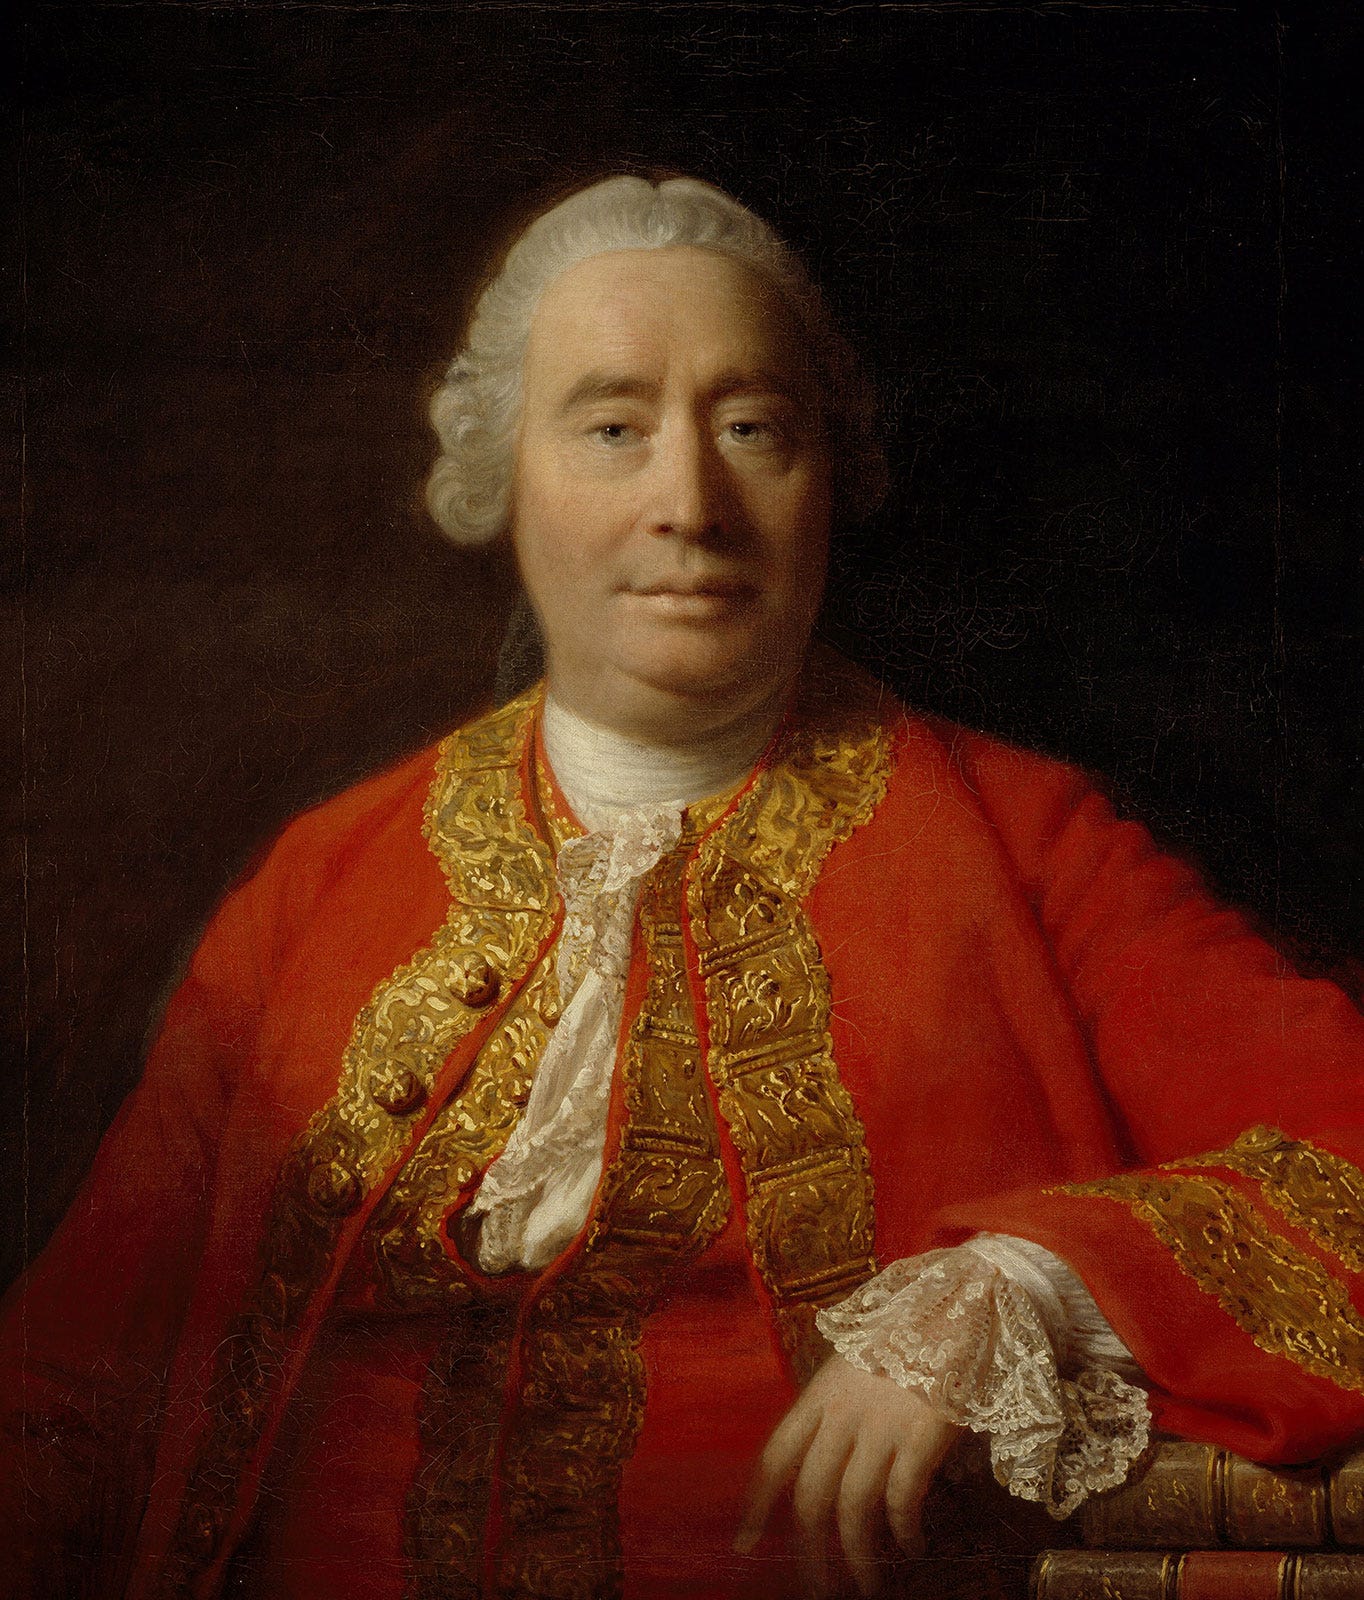 David Hume | Biography, Philosophy, Empiricism, Skepticism, &amp; Works |  Britannica